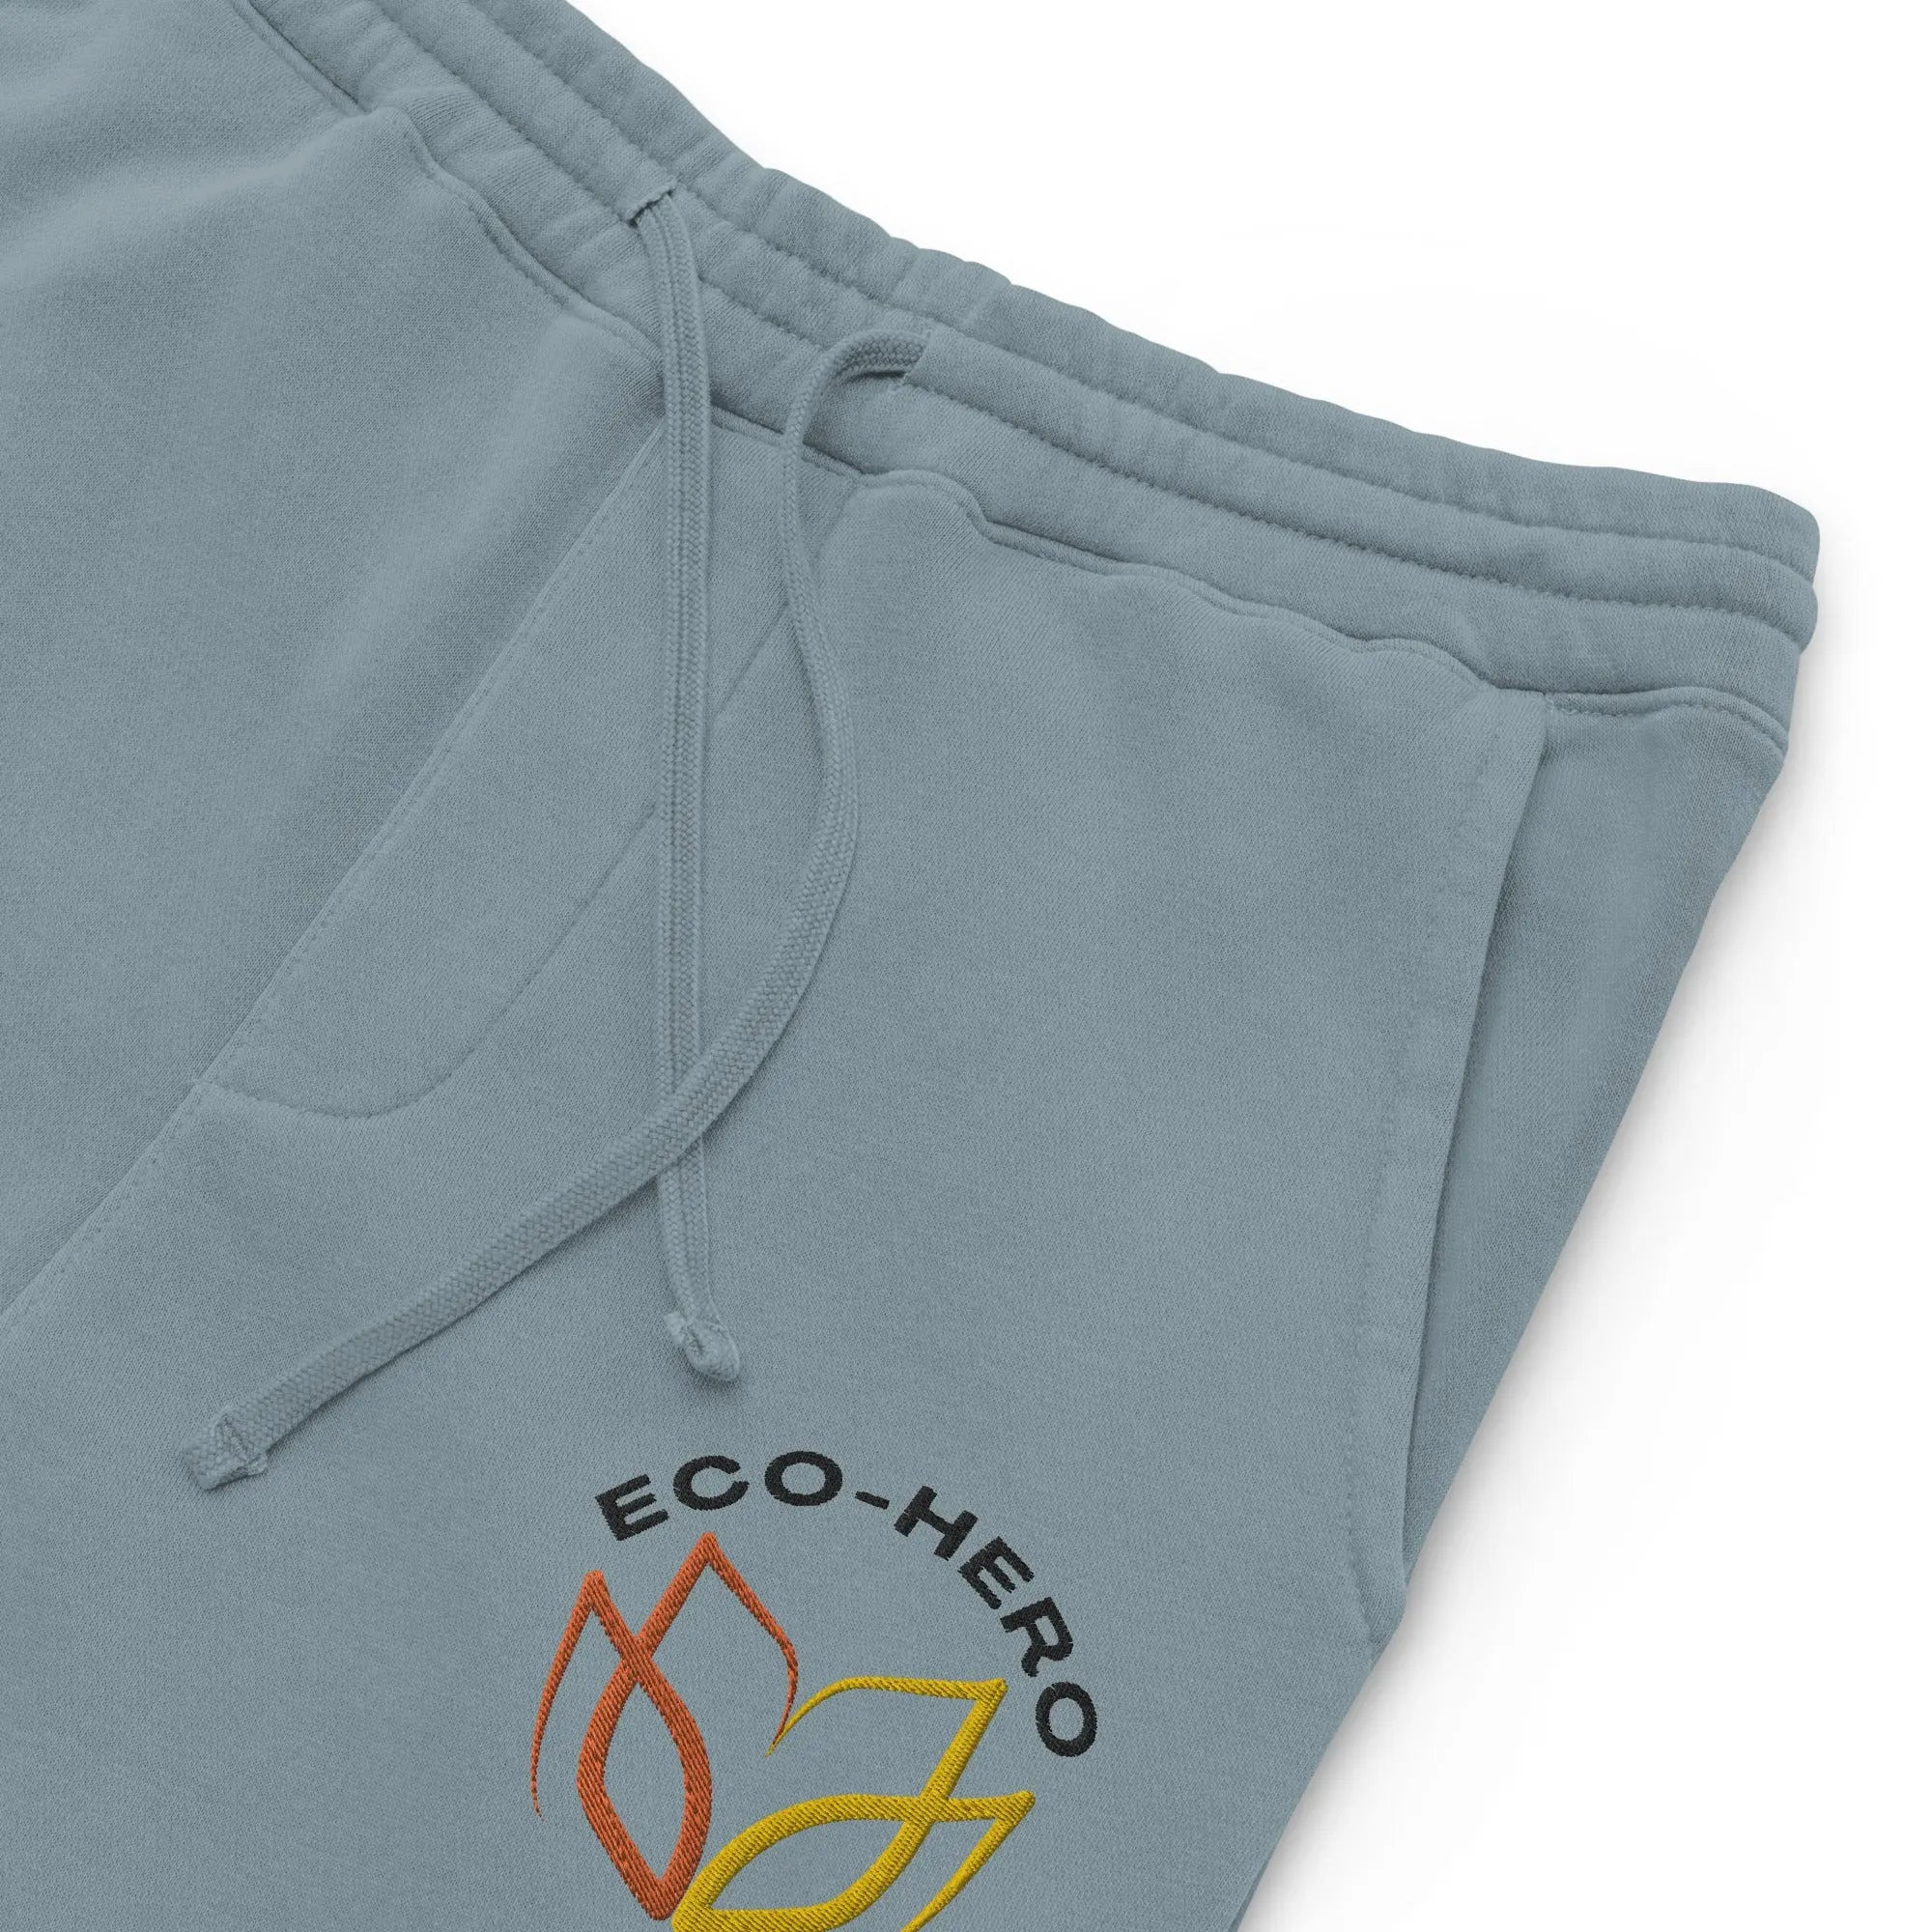 Eco-Hero Embroidered | Pigment-dyed sweatpants GeorgeKenny Design